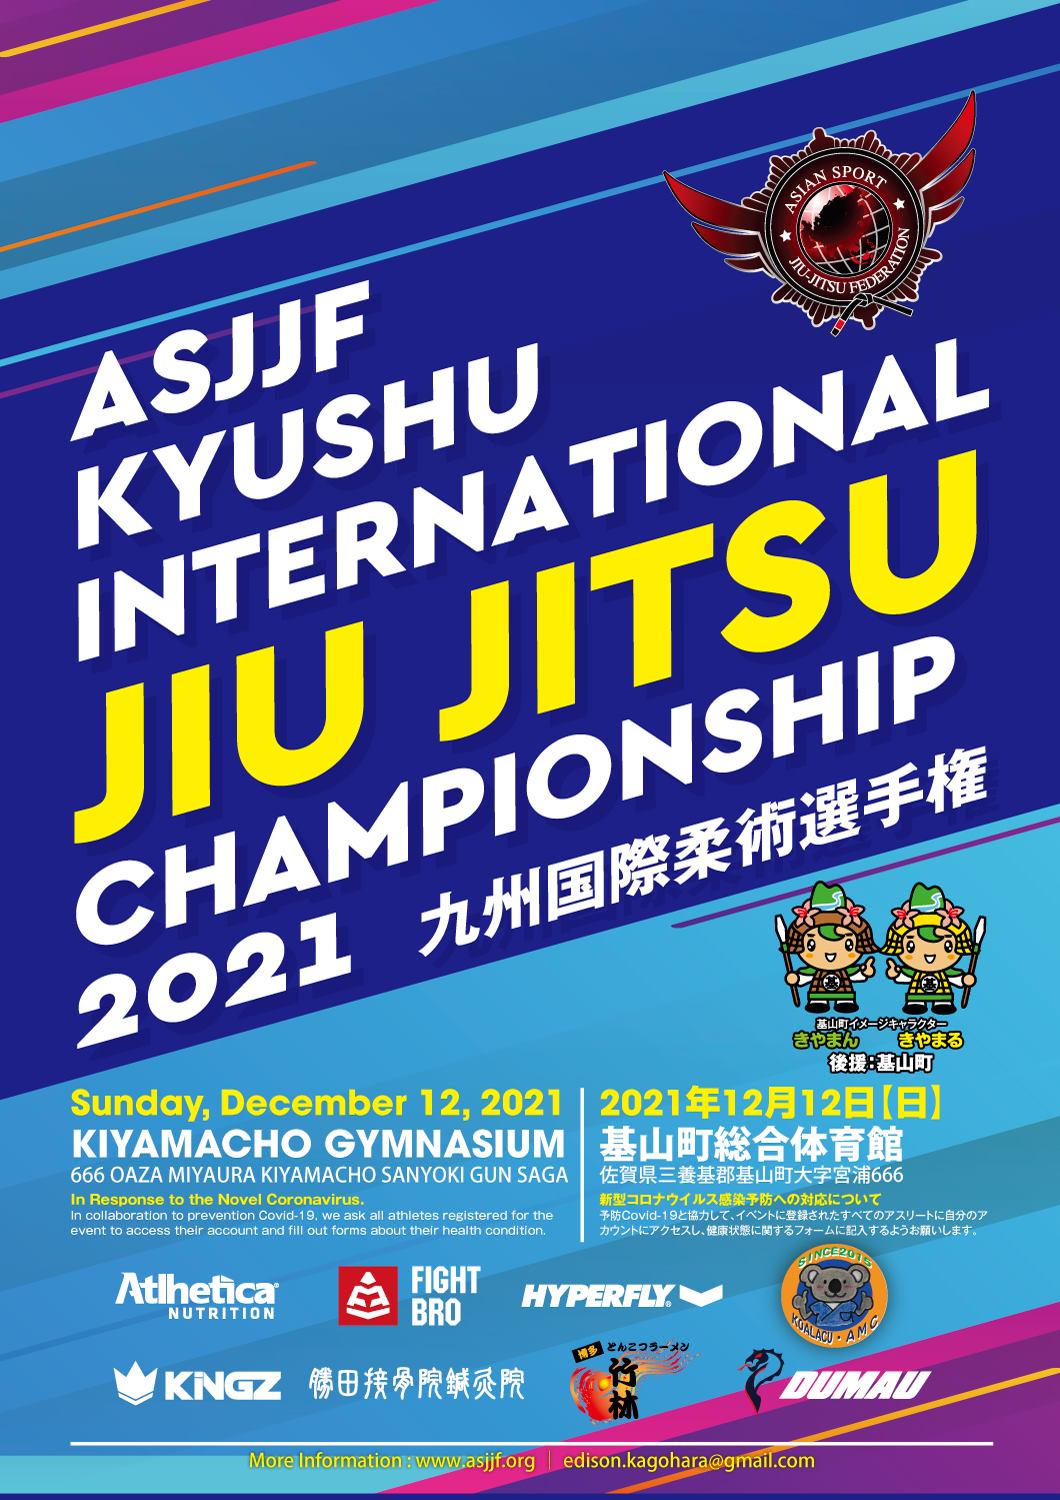 asjjf kyushu international jiu jitsu championship 2021